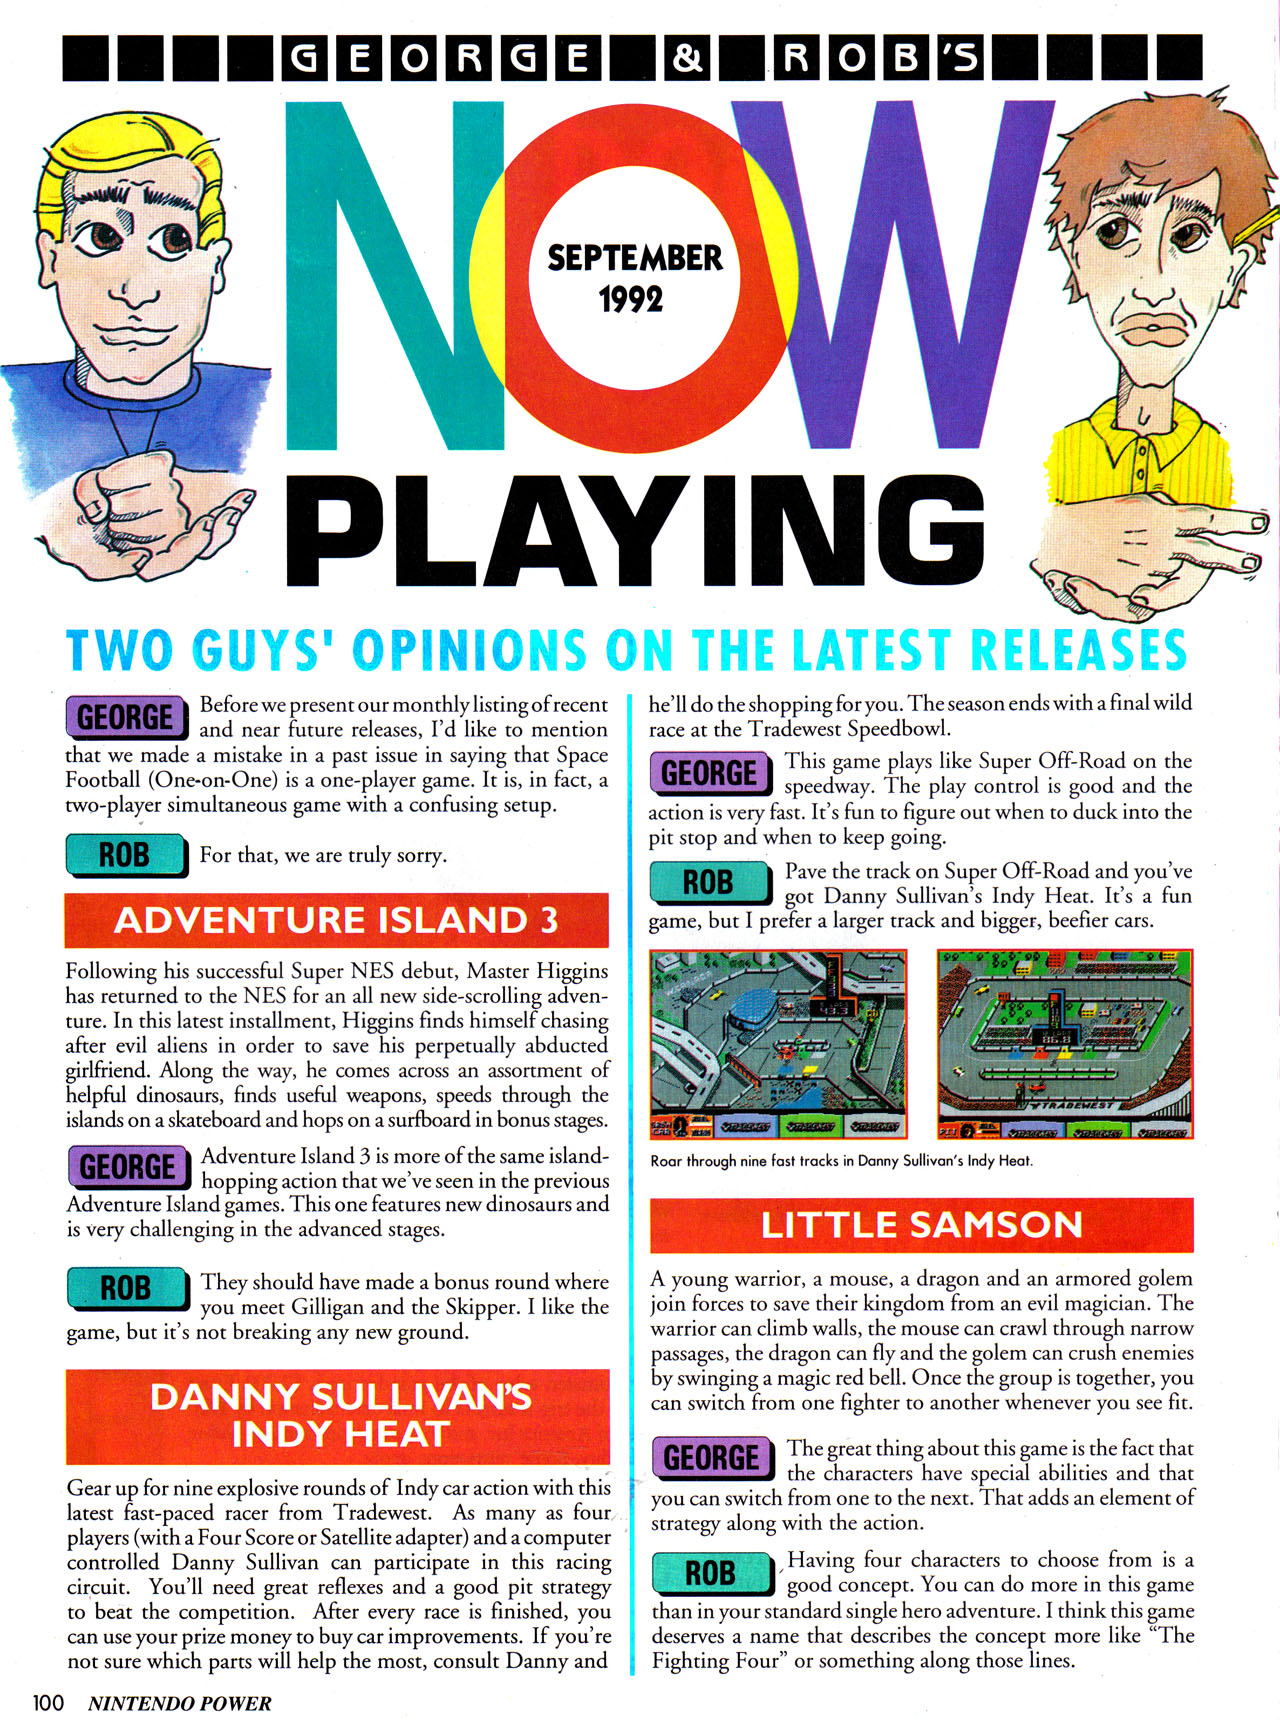 Read online Nintendo Power comic -  Issue #40 - 111